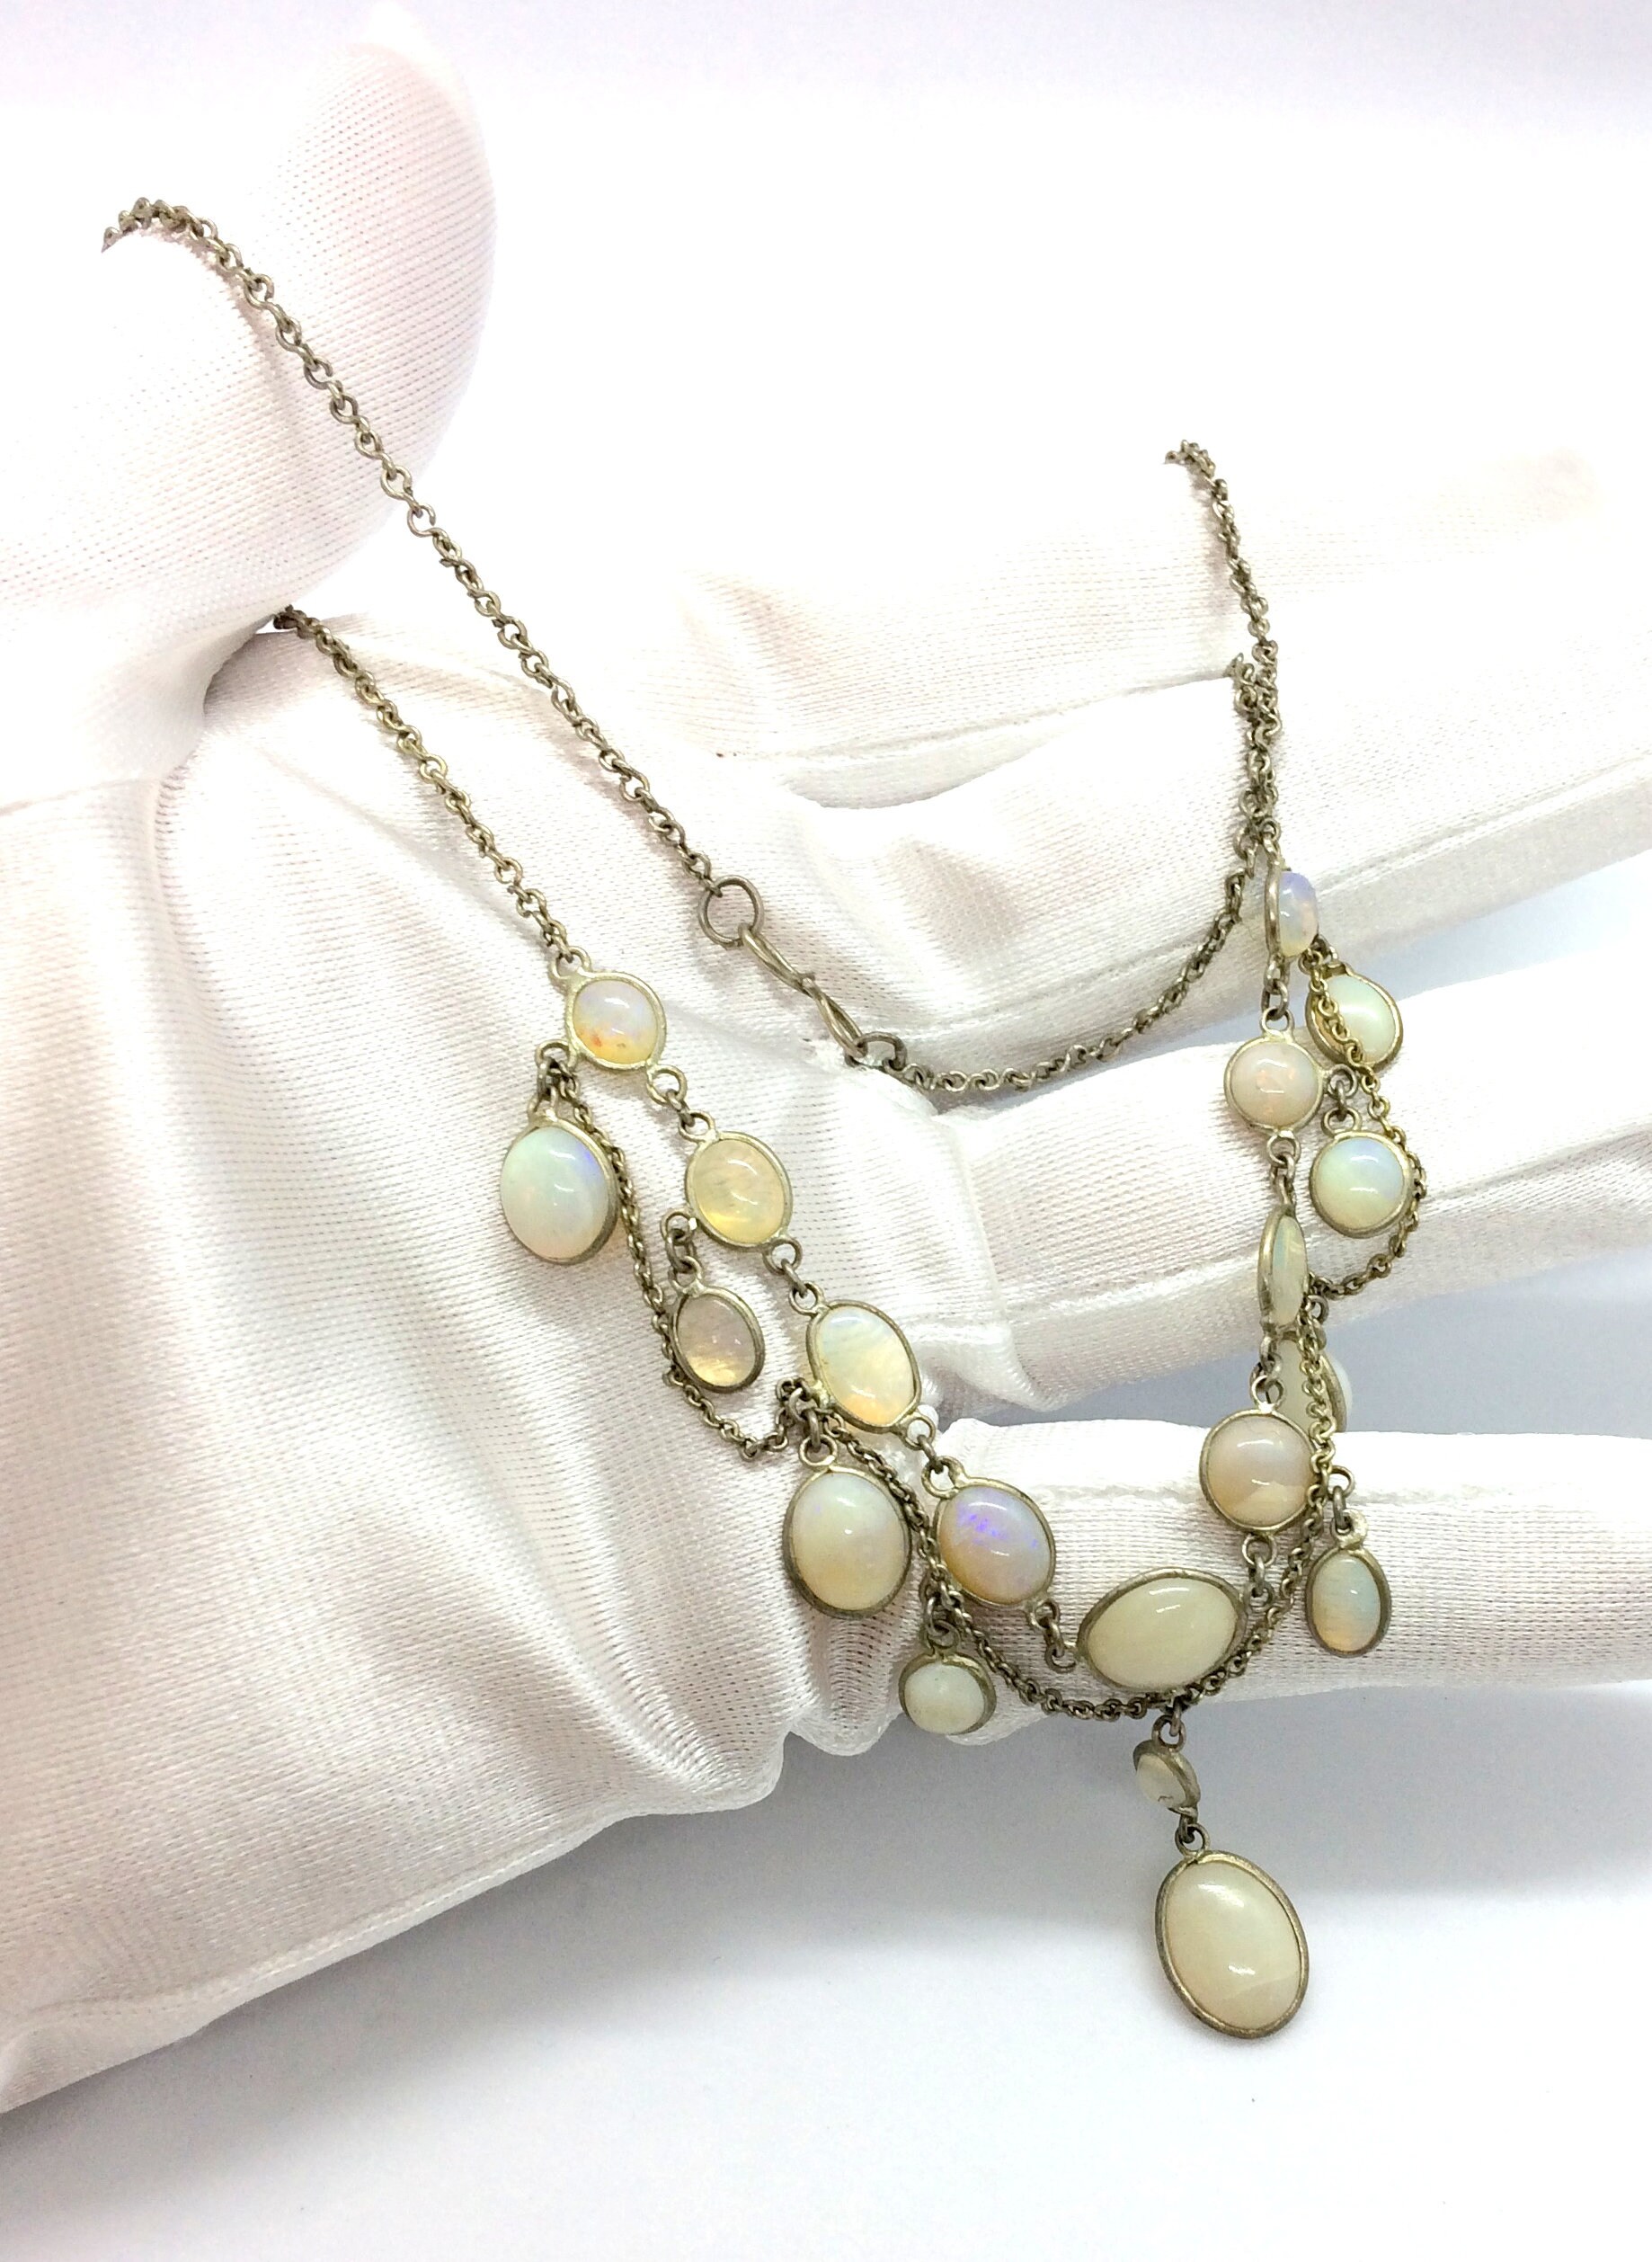 Antique Edwardian Silver White & Jelly Opal Festoon Necklace | Etsy